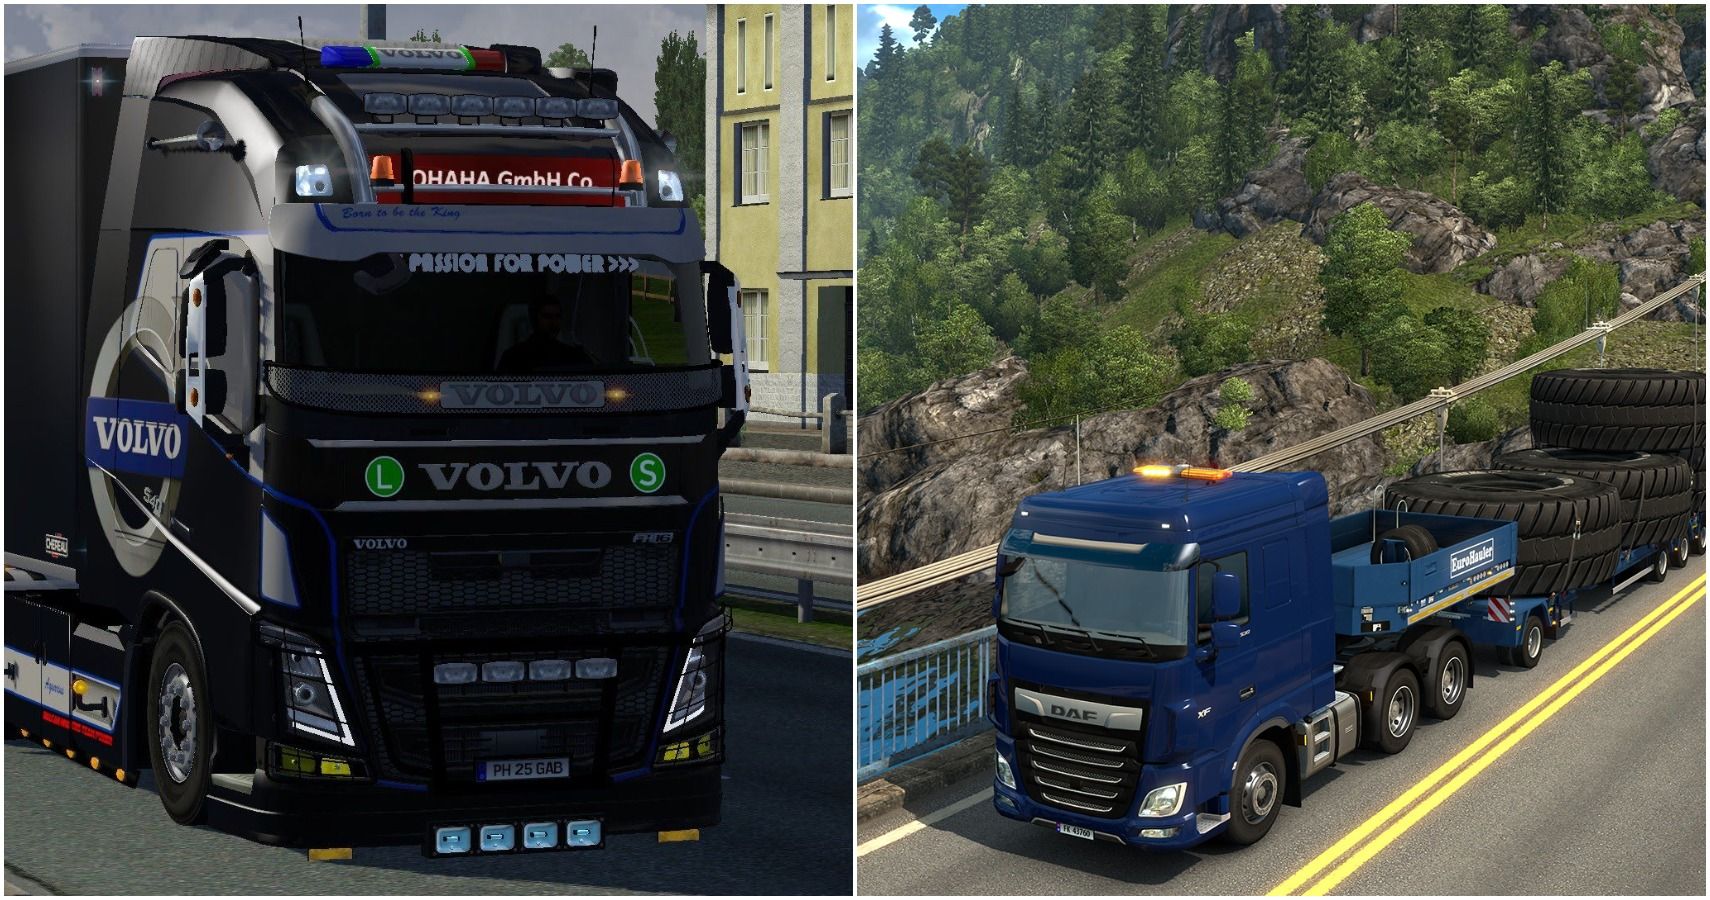 Stream Euro Truck Simulator 2: The Most Realistic Truck Simulation